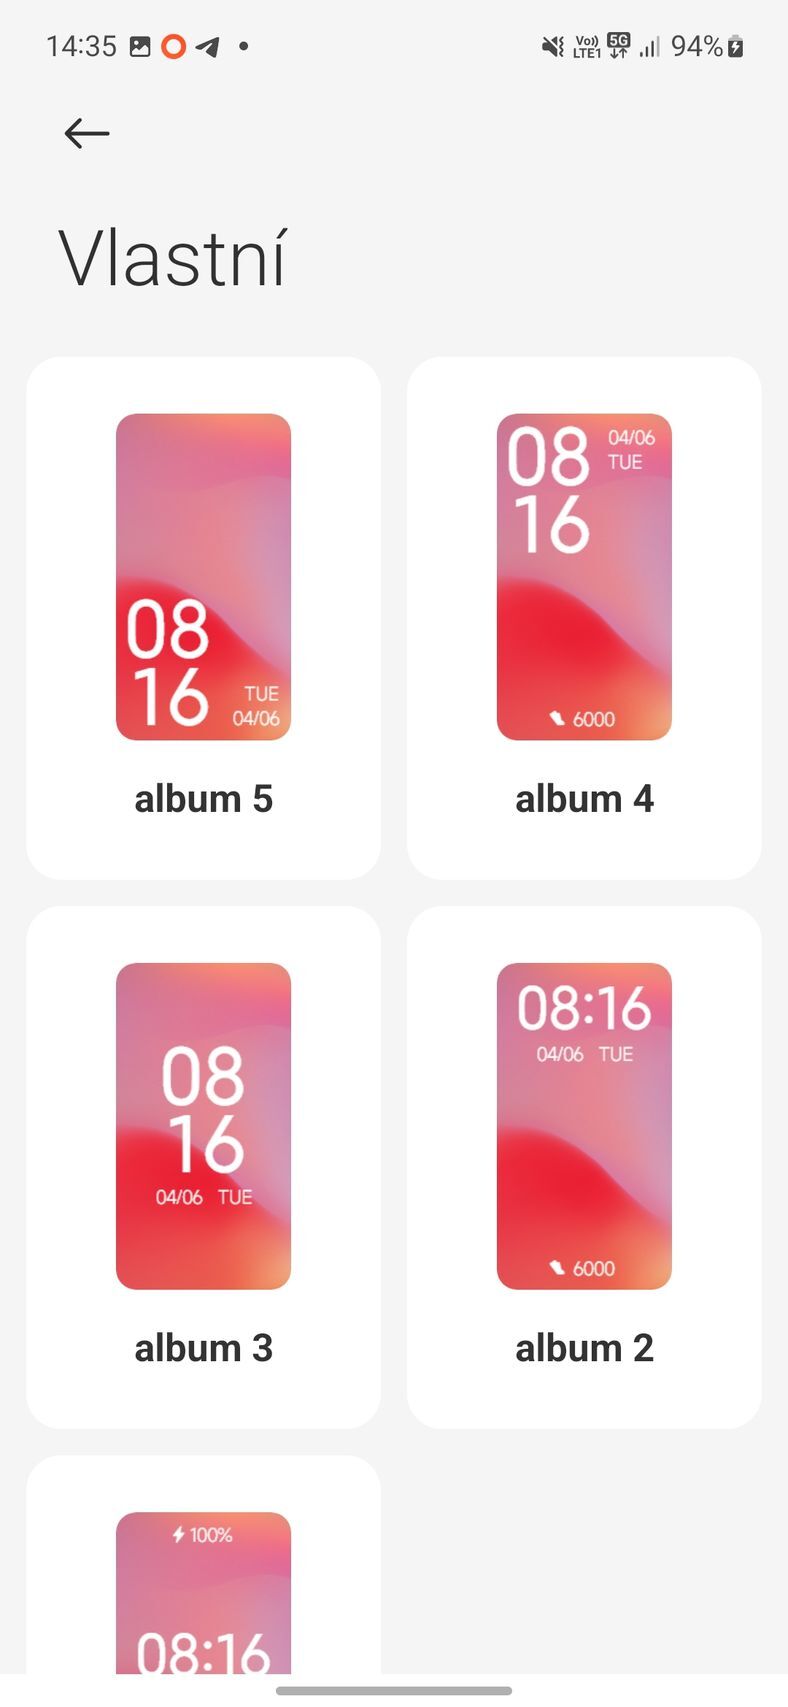 Xiaomi Redmi Smart Band 2